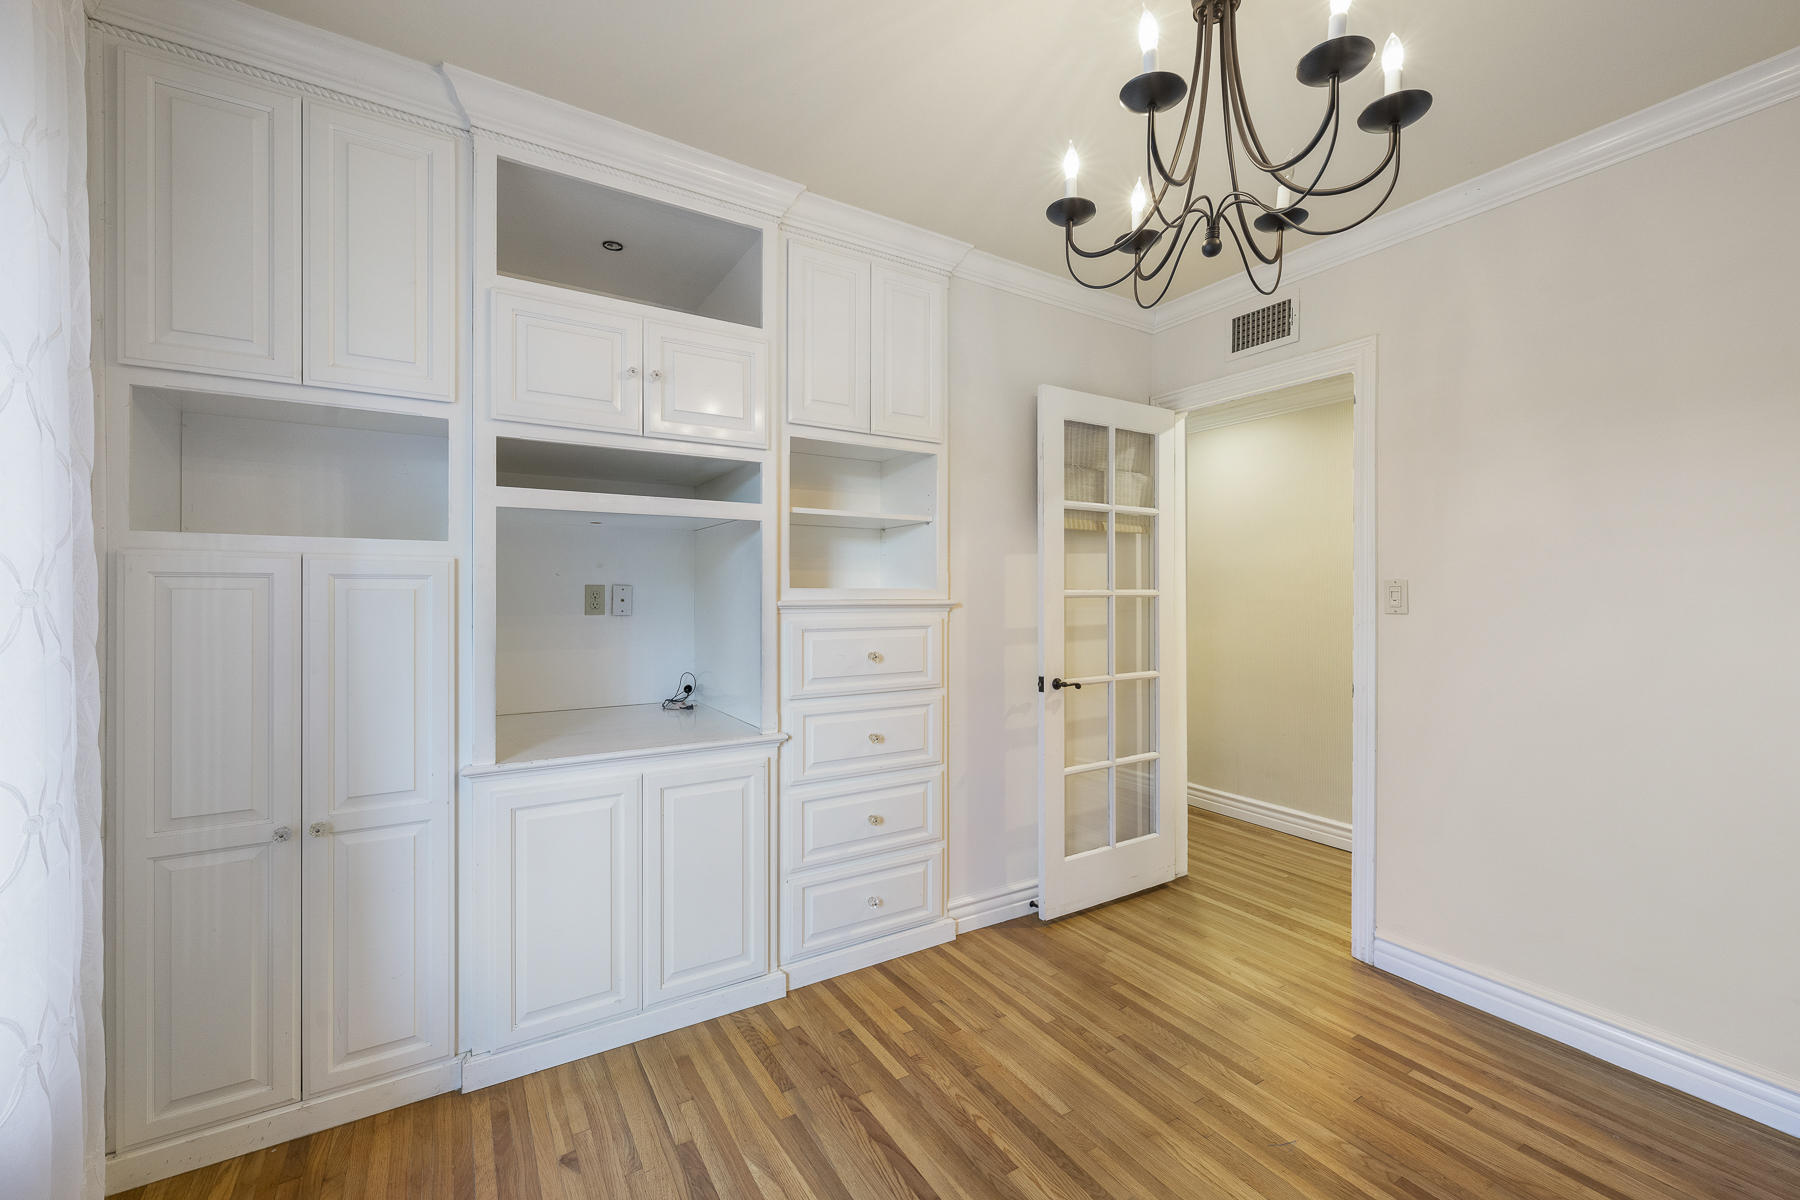 806 N. Adlena Drive, Fullerton, CA 92833: Interior shot of bedroom closet shelves.